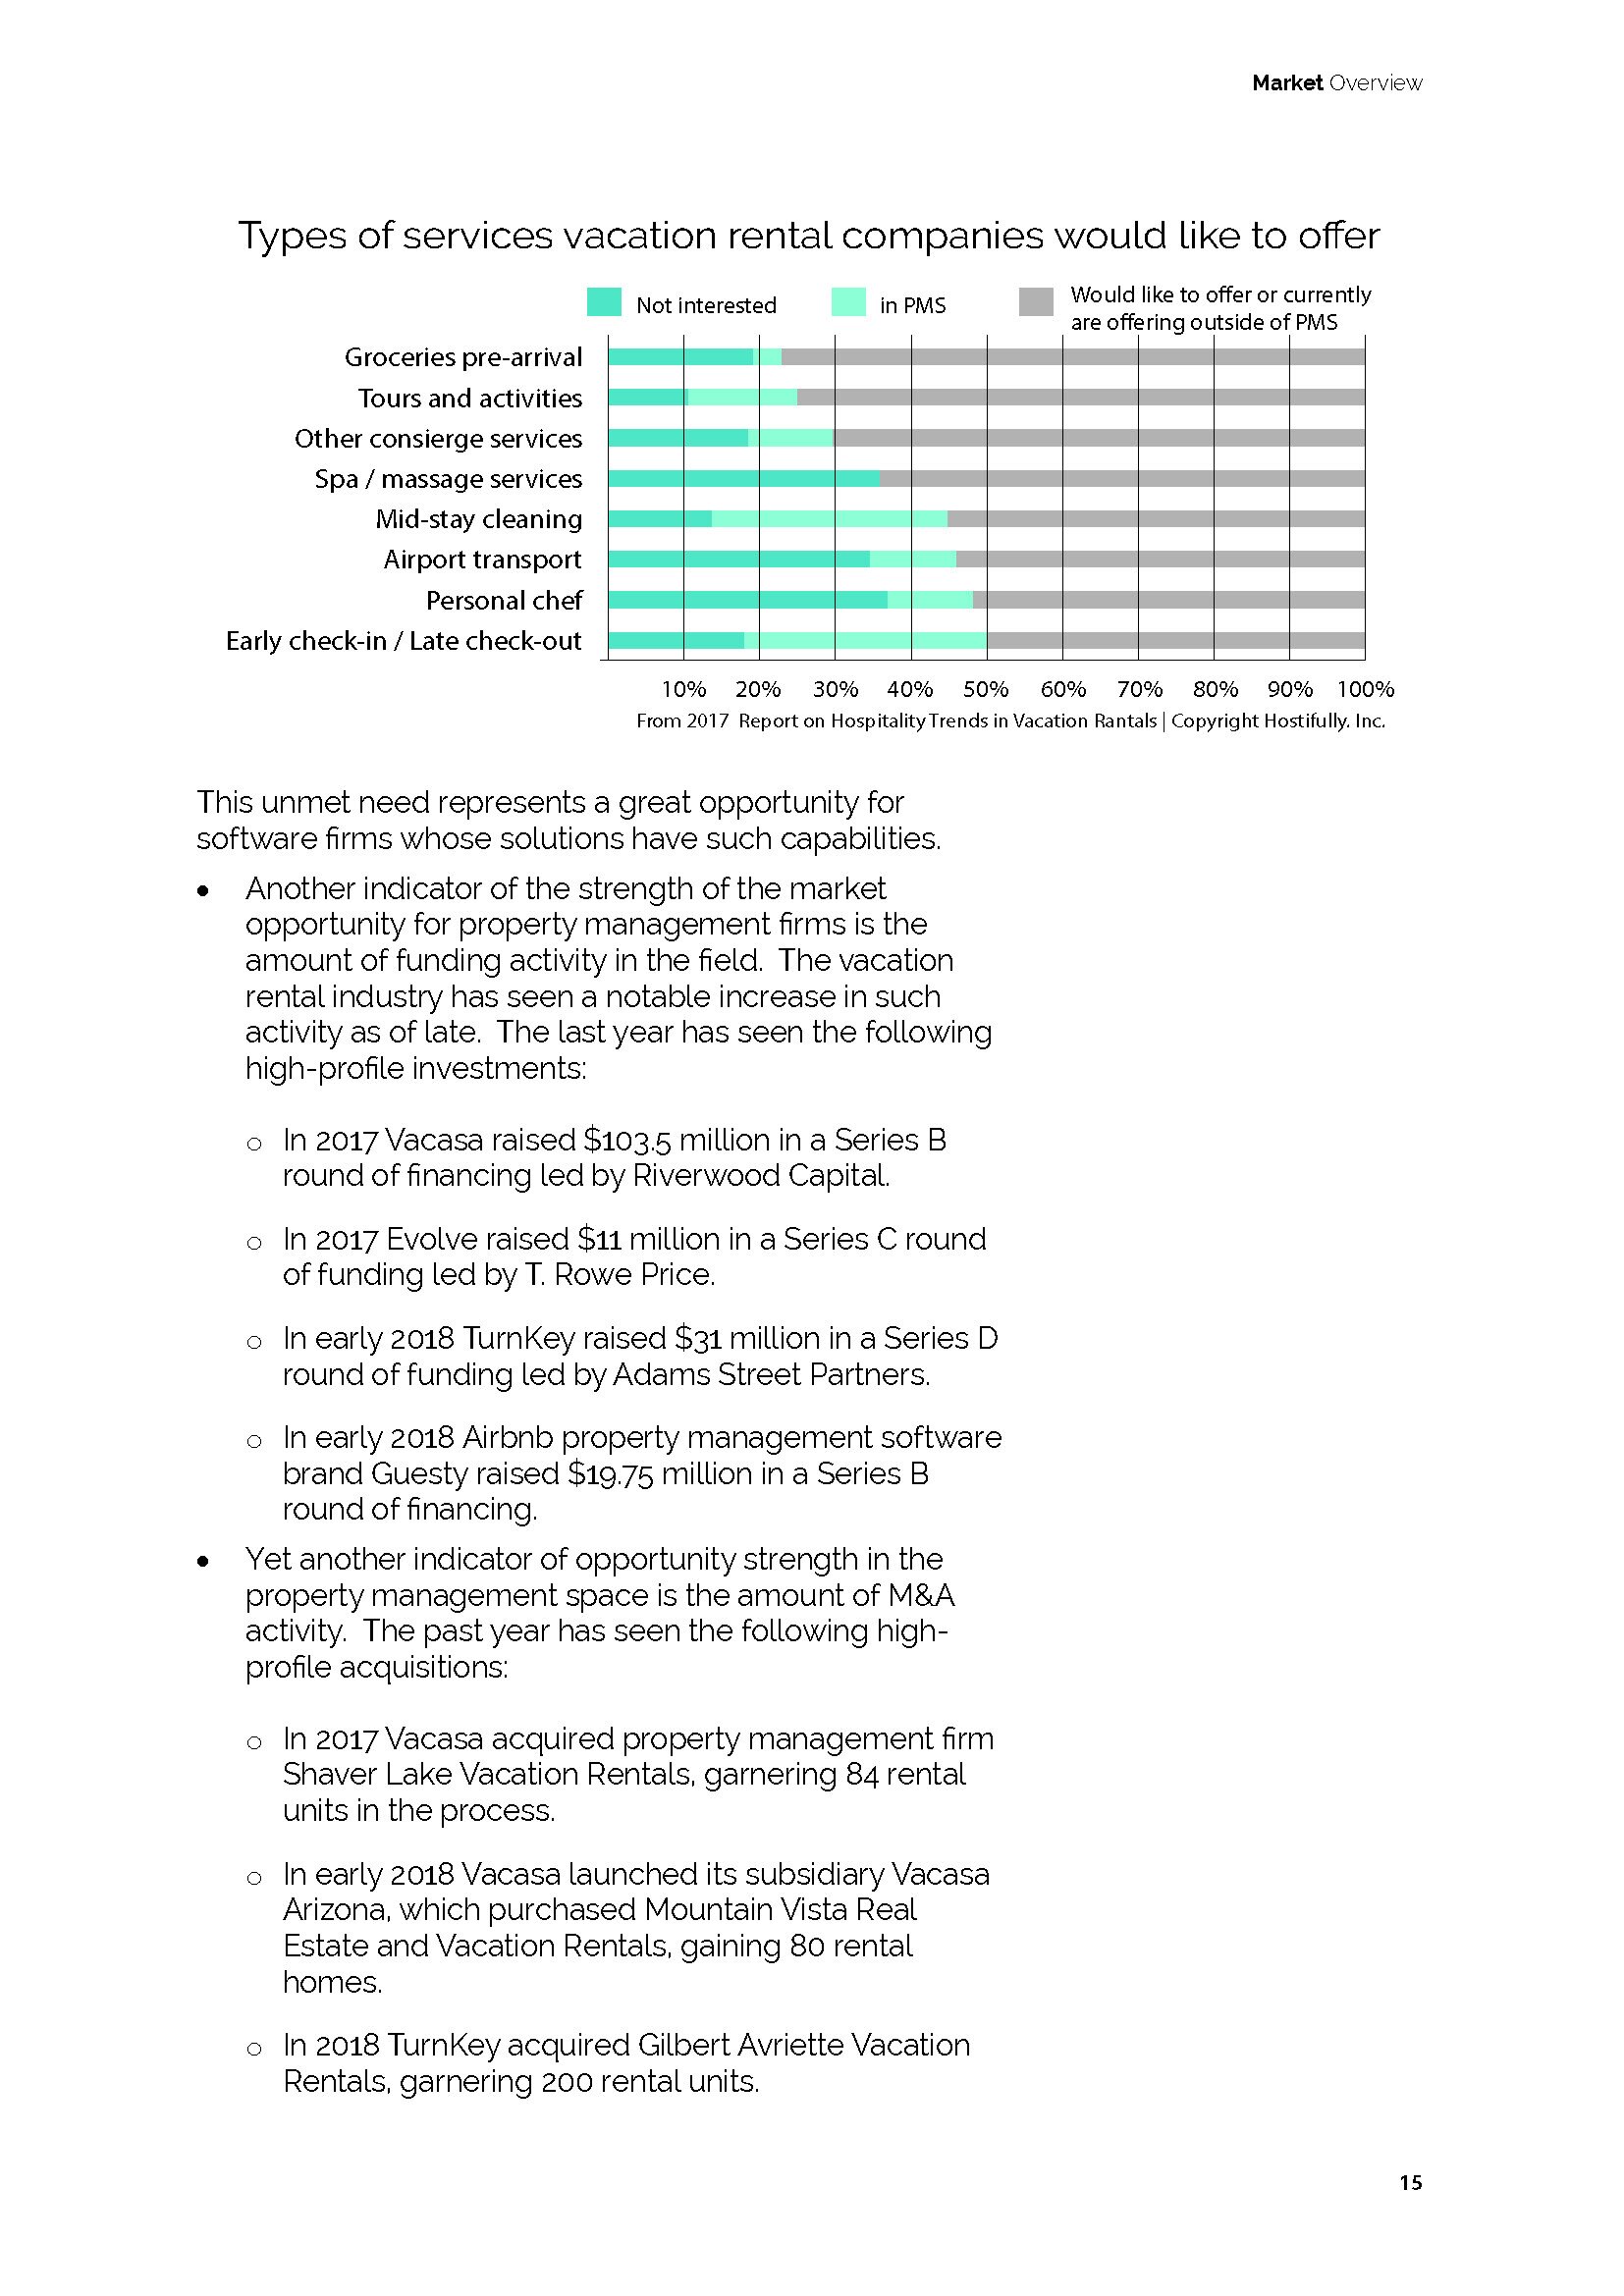 VILLAWAY - Market Research Report_Page_15.jpg